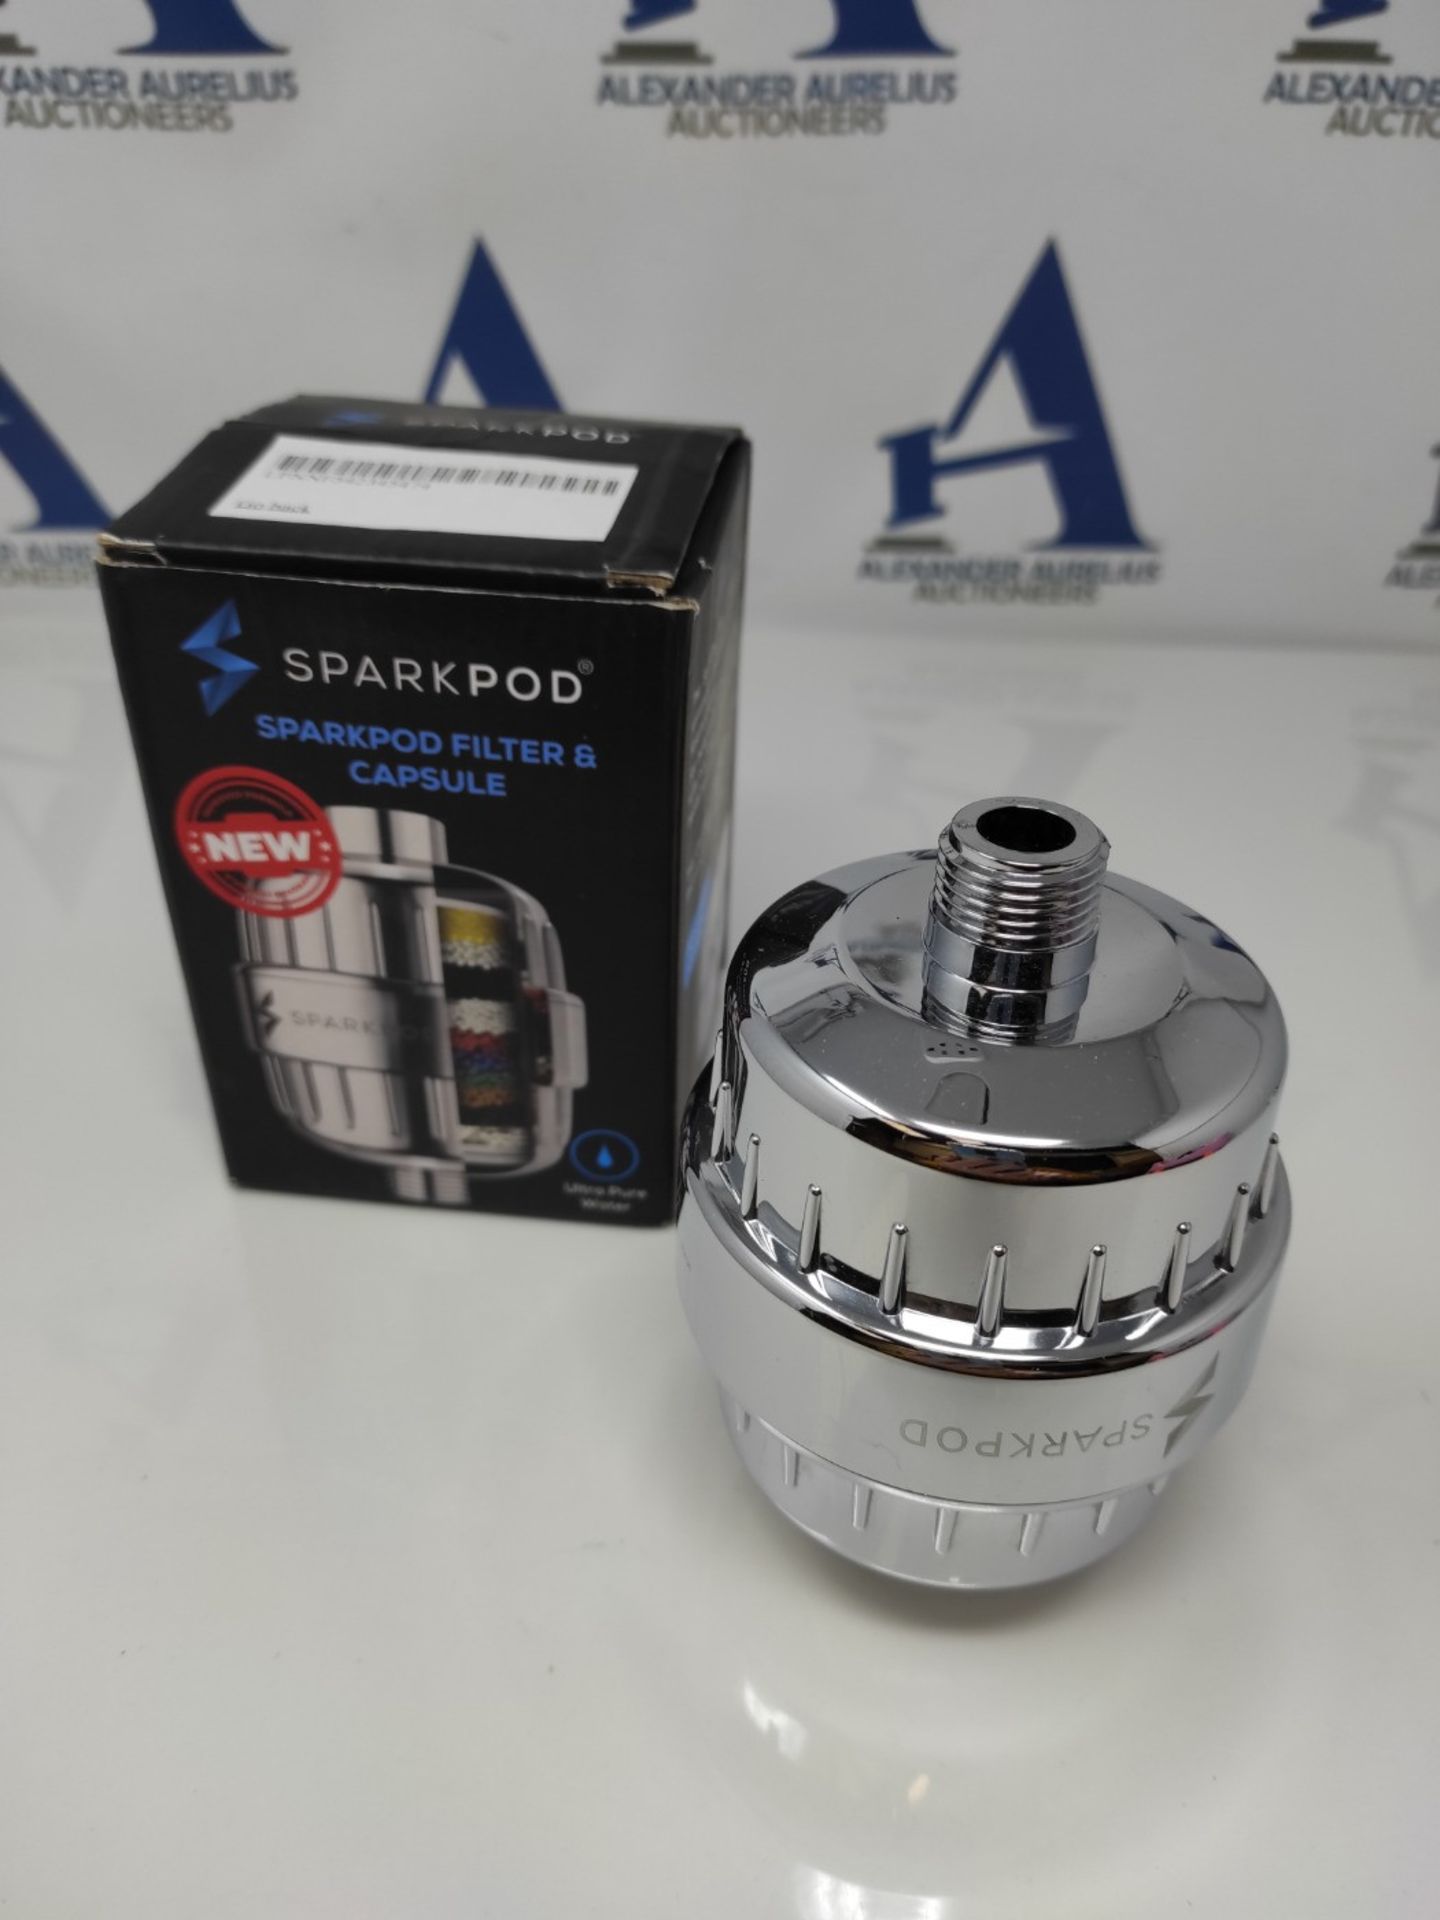 SparkPod High Output Shower Filter Capsule- Rejuvenates Skin and Hair Health (Reduces